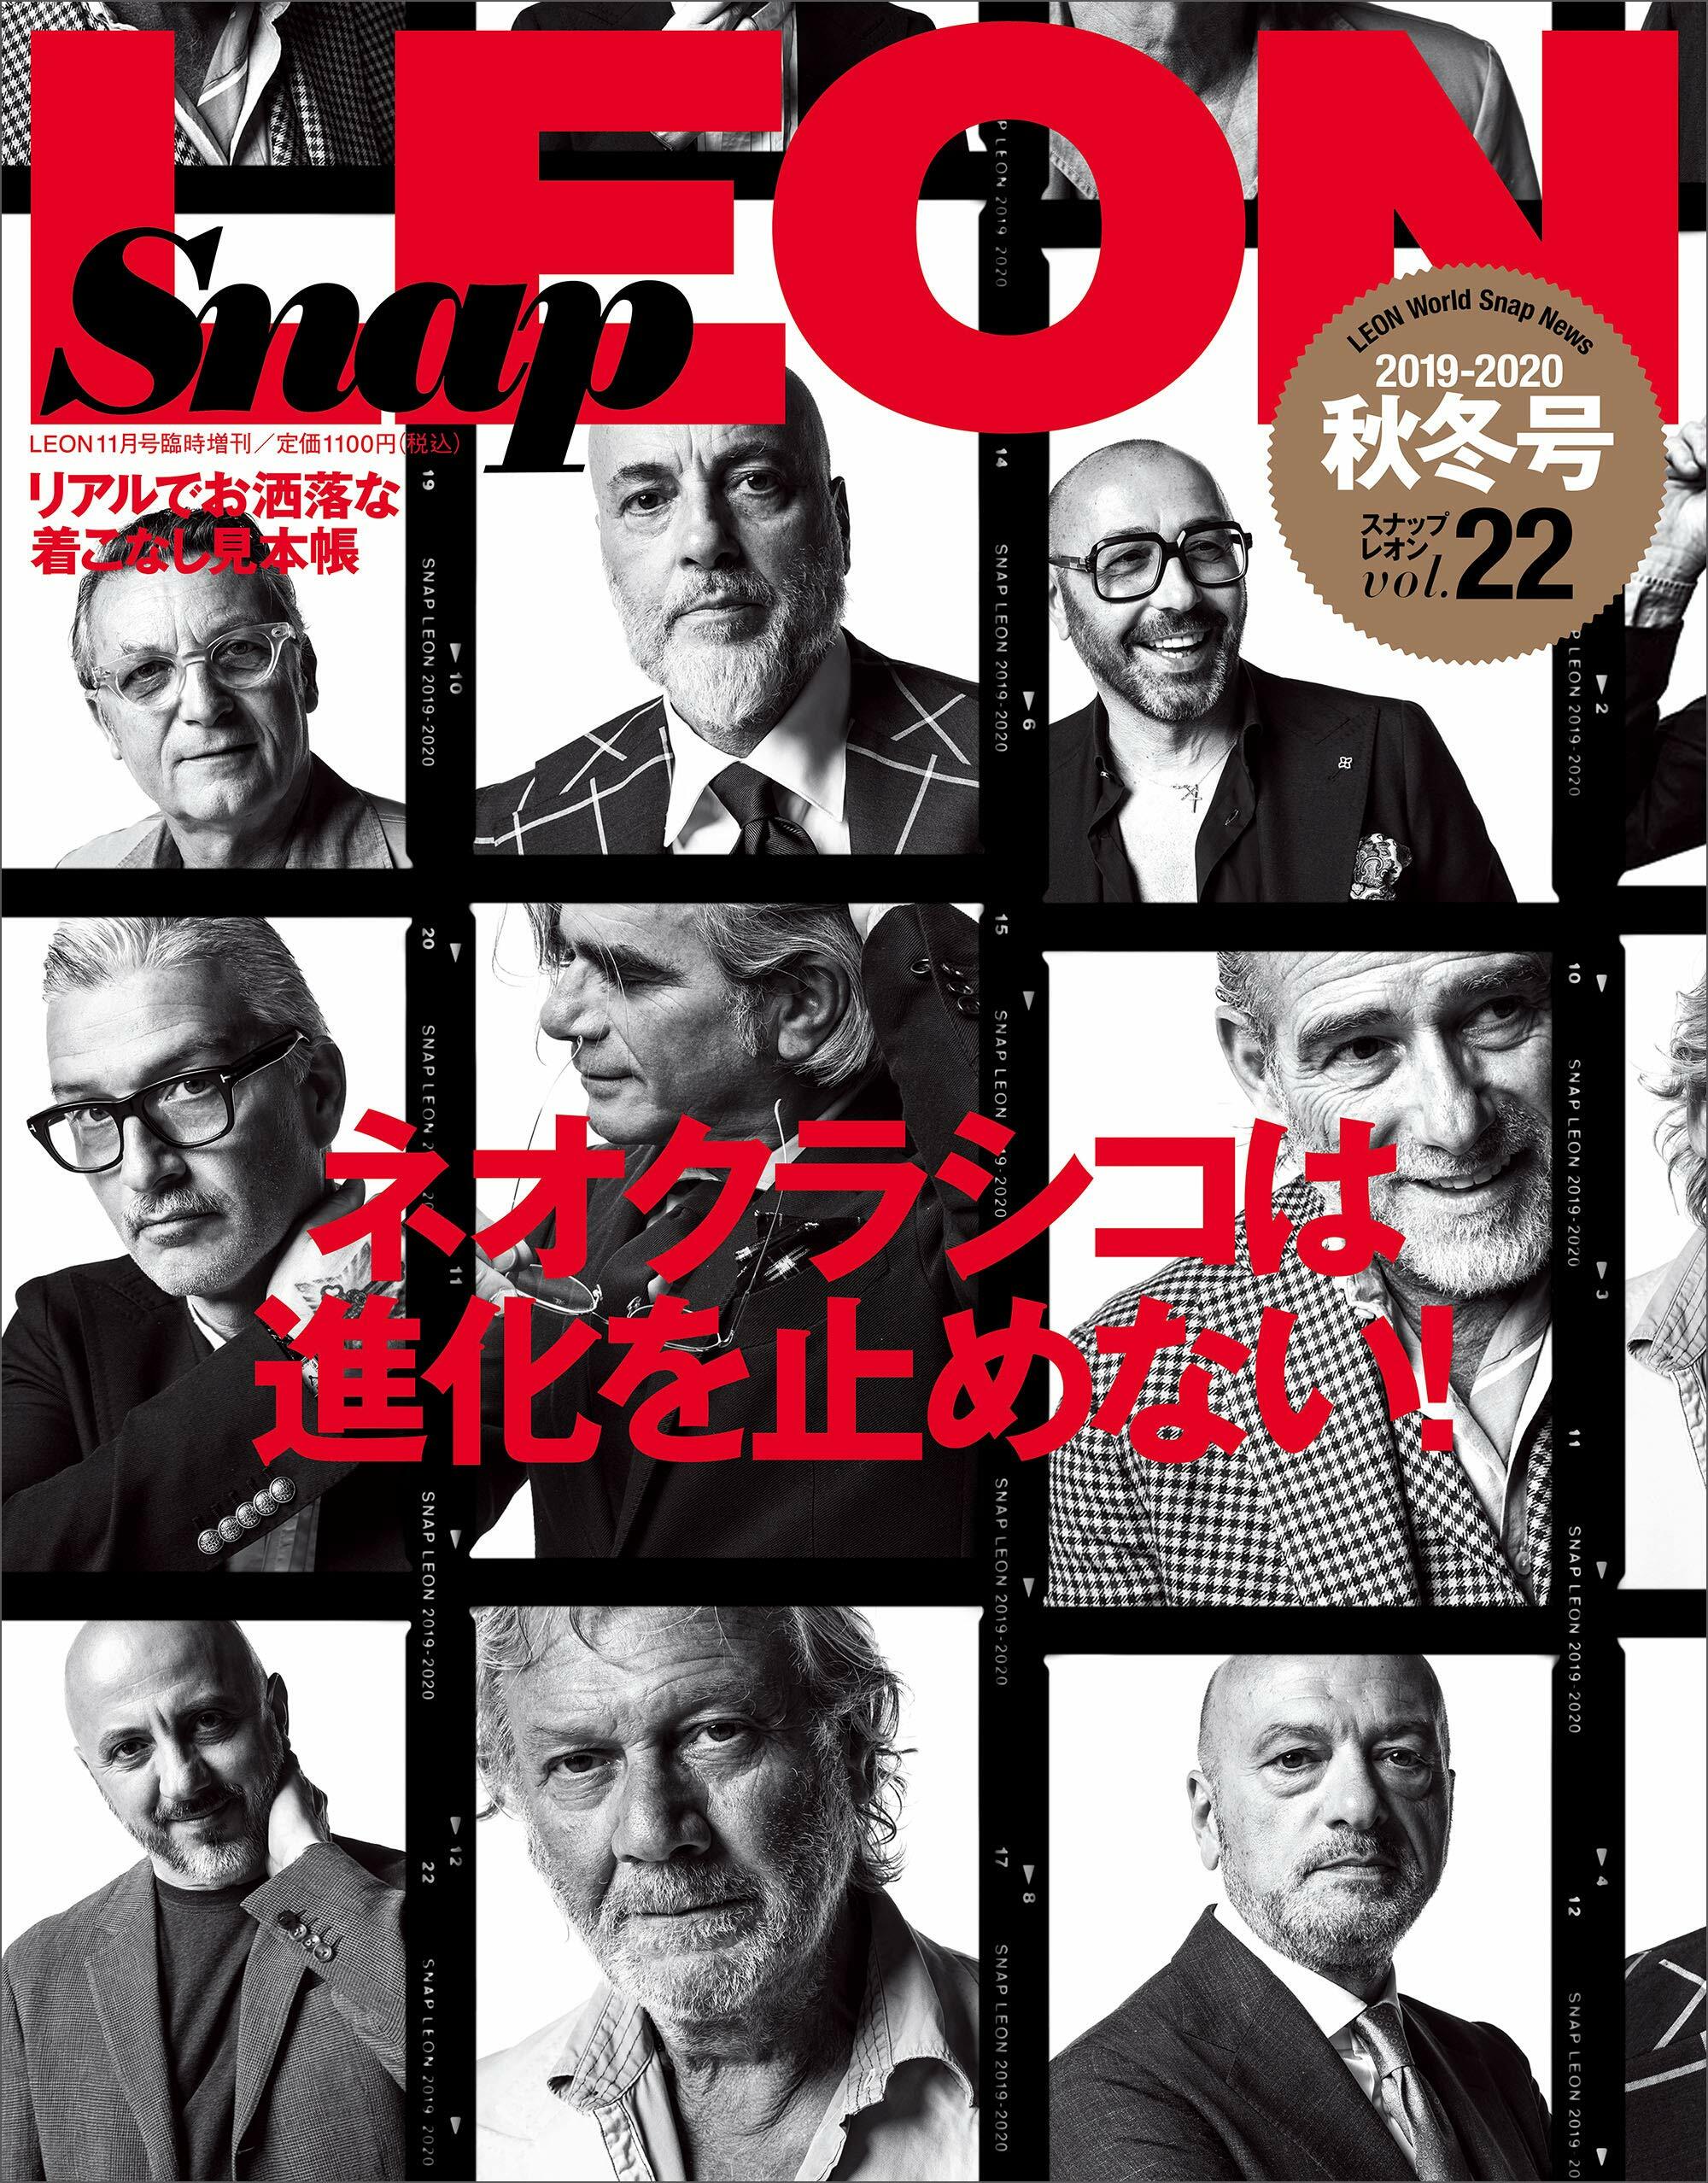 Snap LEON vol.22(2019-2020 秋冬?)